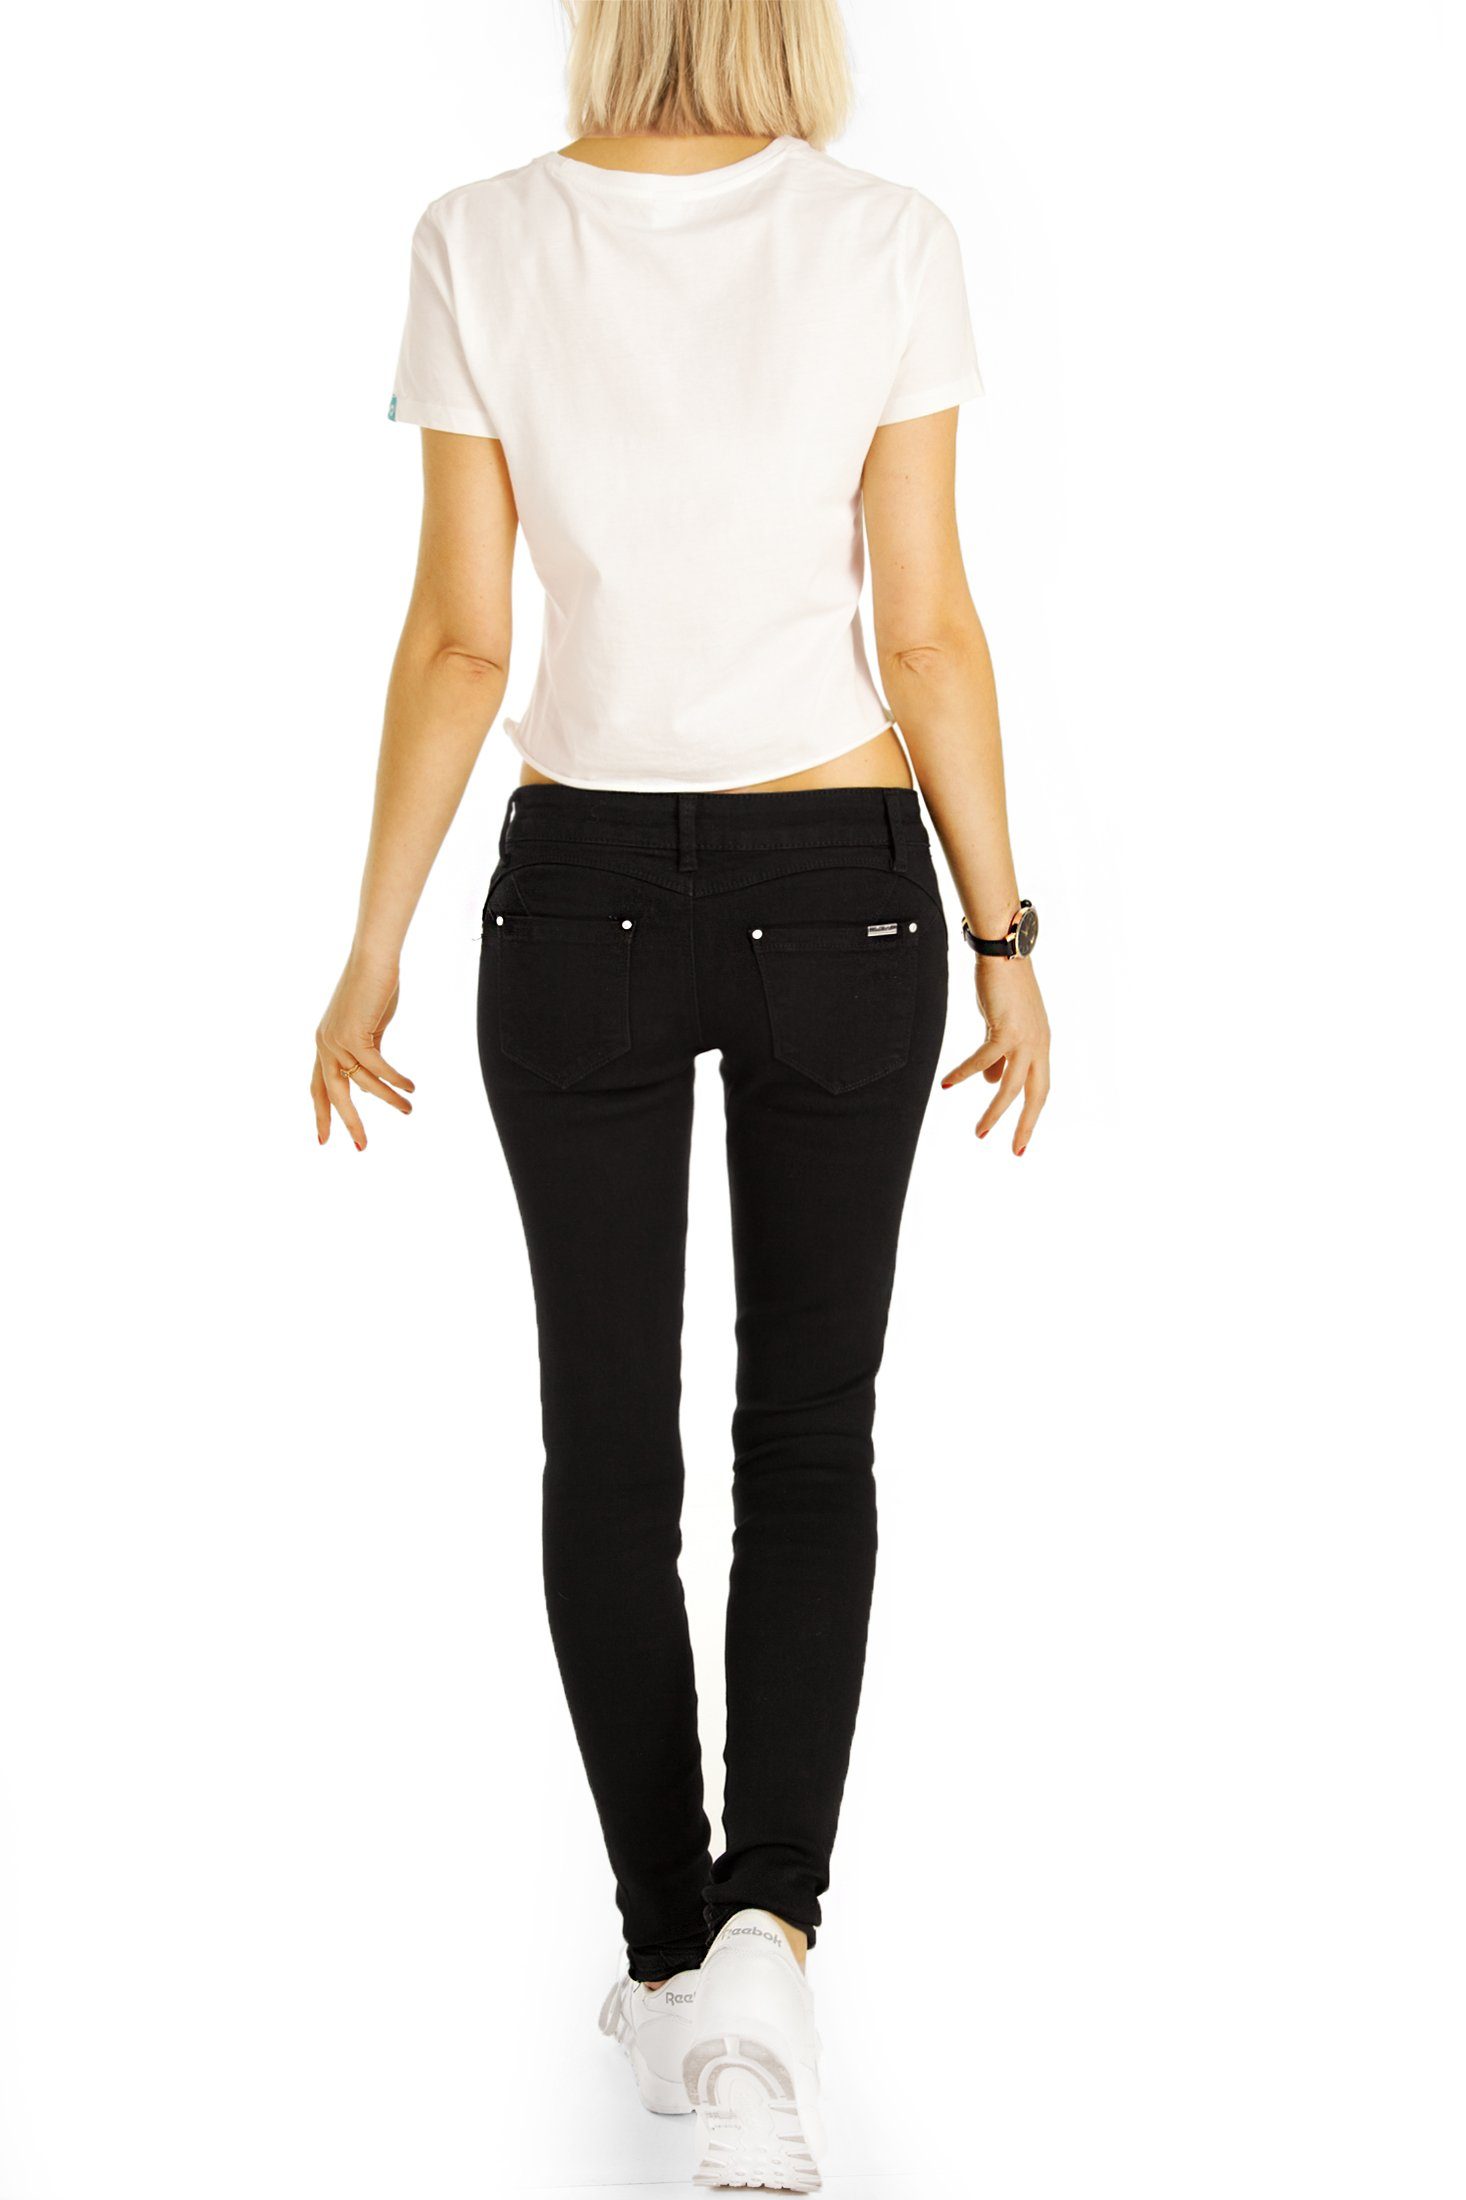 Jeans Low Waist - Hüftjeans Low-rise-Jeans 5-Pocket-Style j2e Damen mit Stretch-Anteil, Hose Röhrenjeans be - styled hüftige